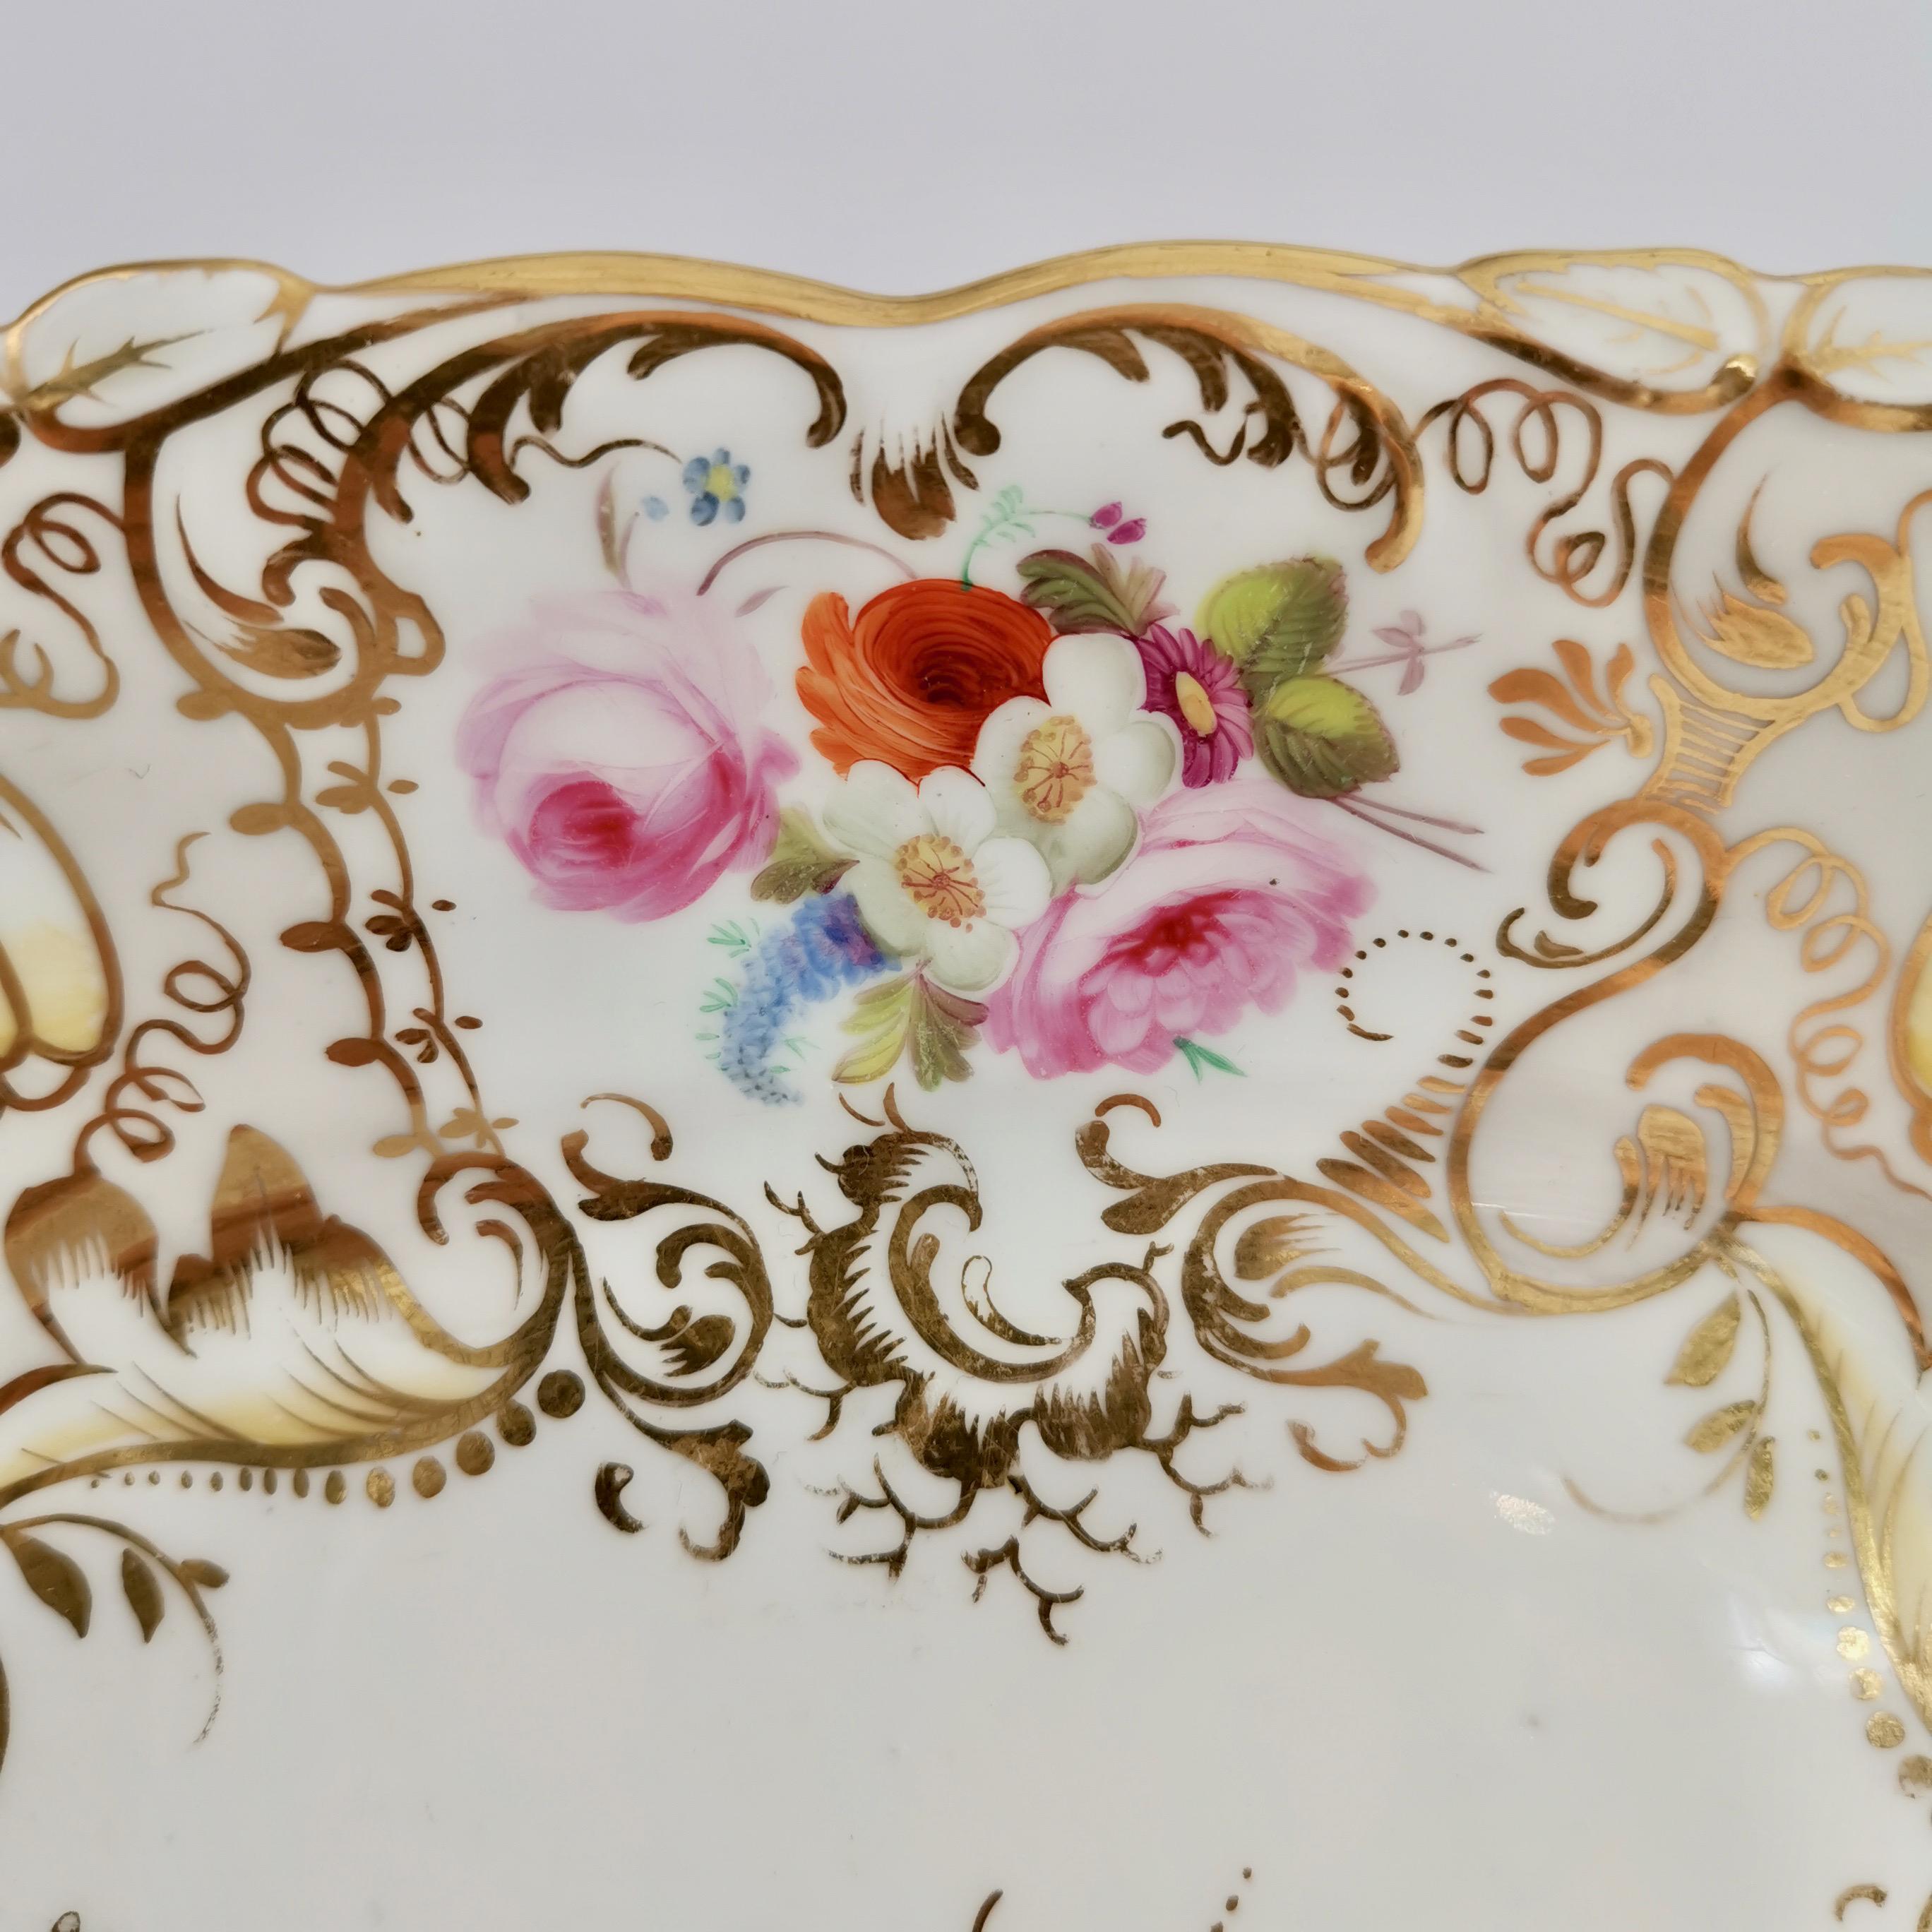 Rococo Revival Porcelain Cake Plate, Coalport, Gilt and Flowers Attr. Thomas Dixon, 1834